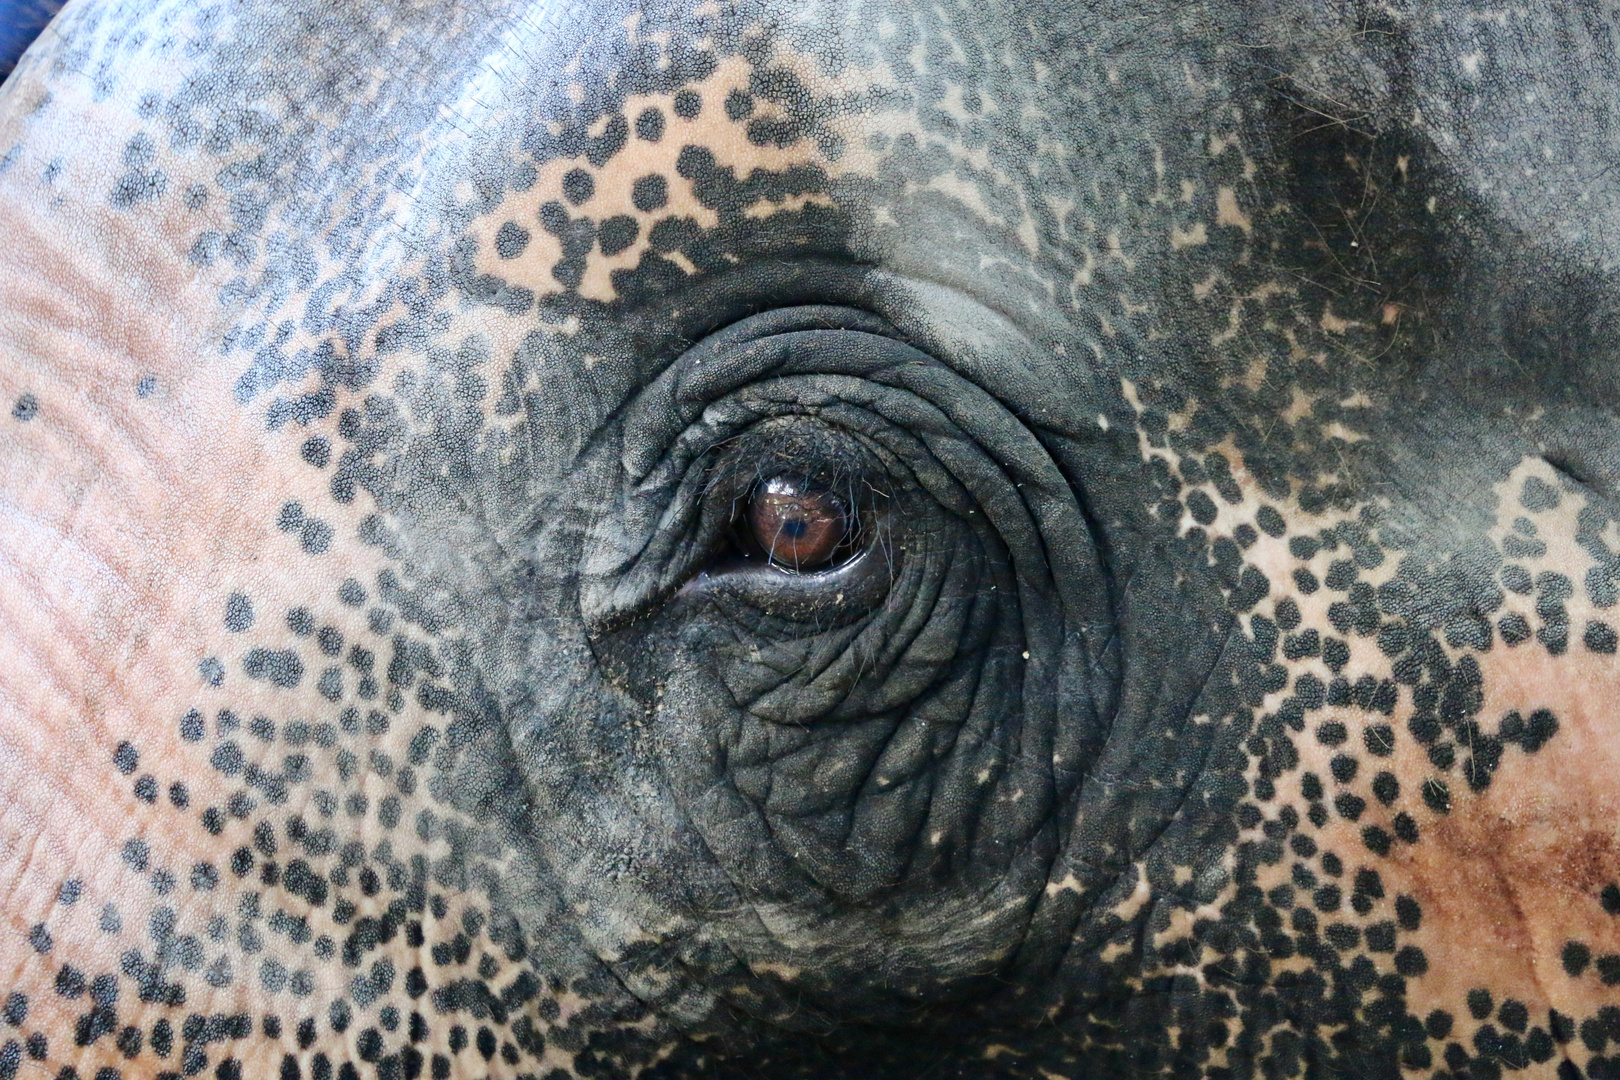 Elefant Thailand